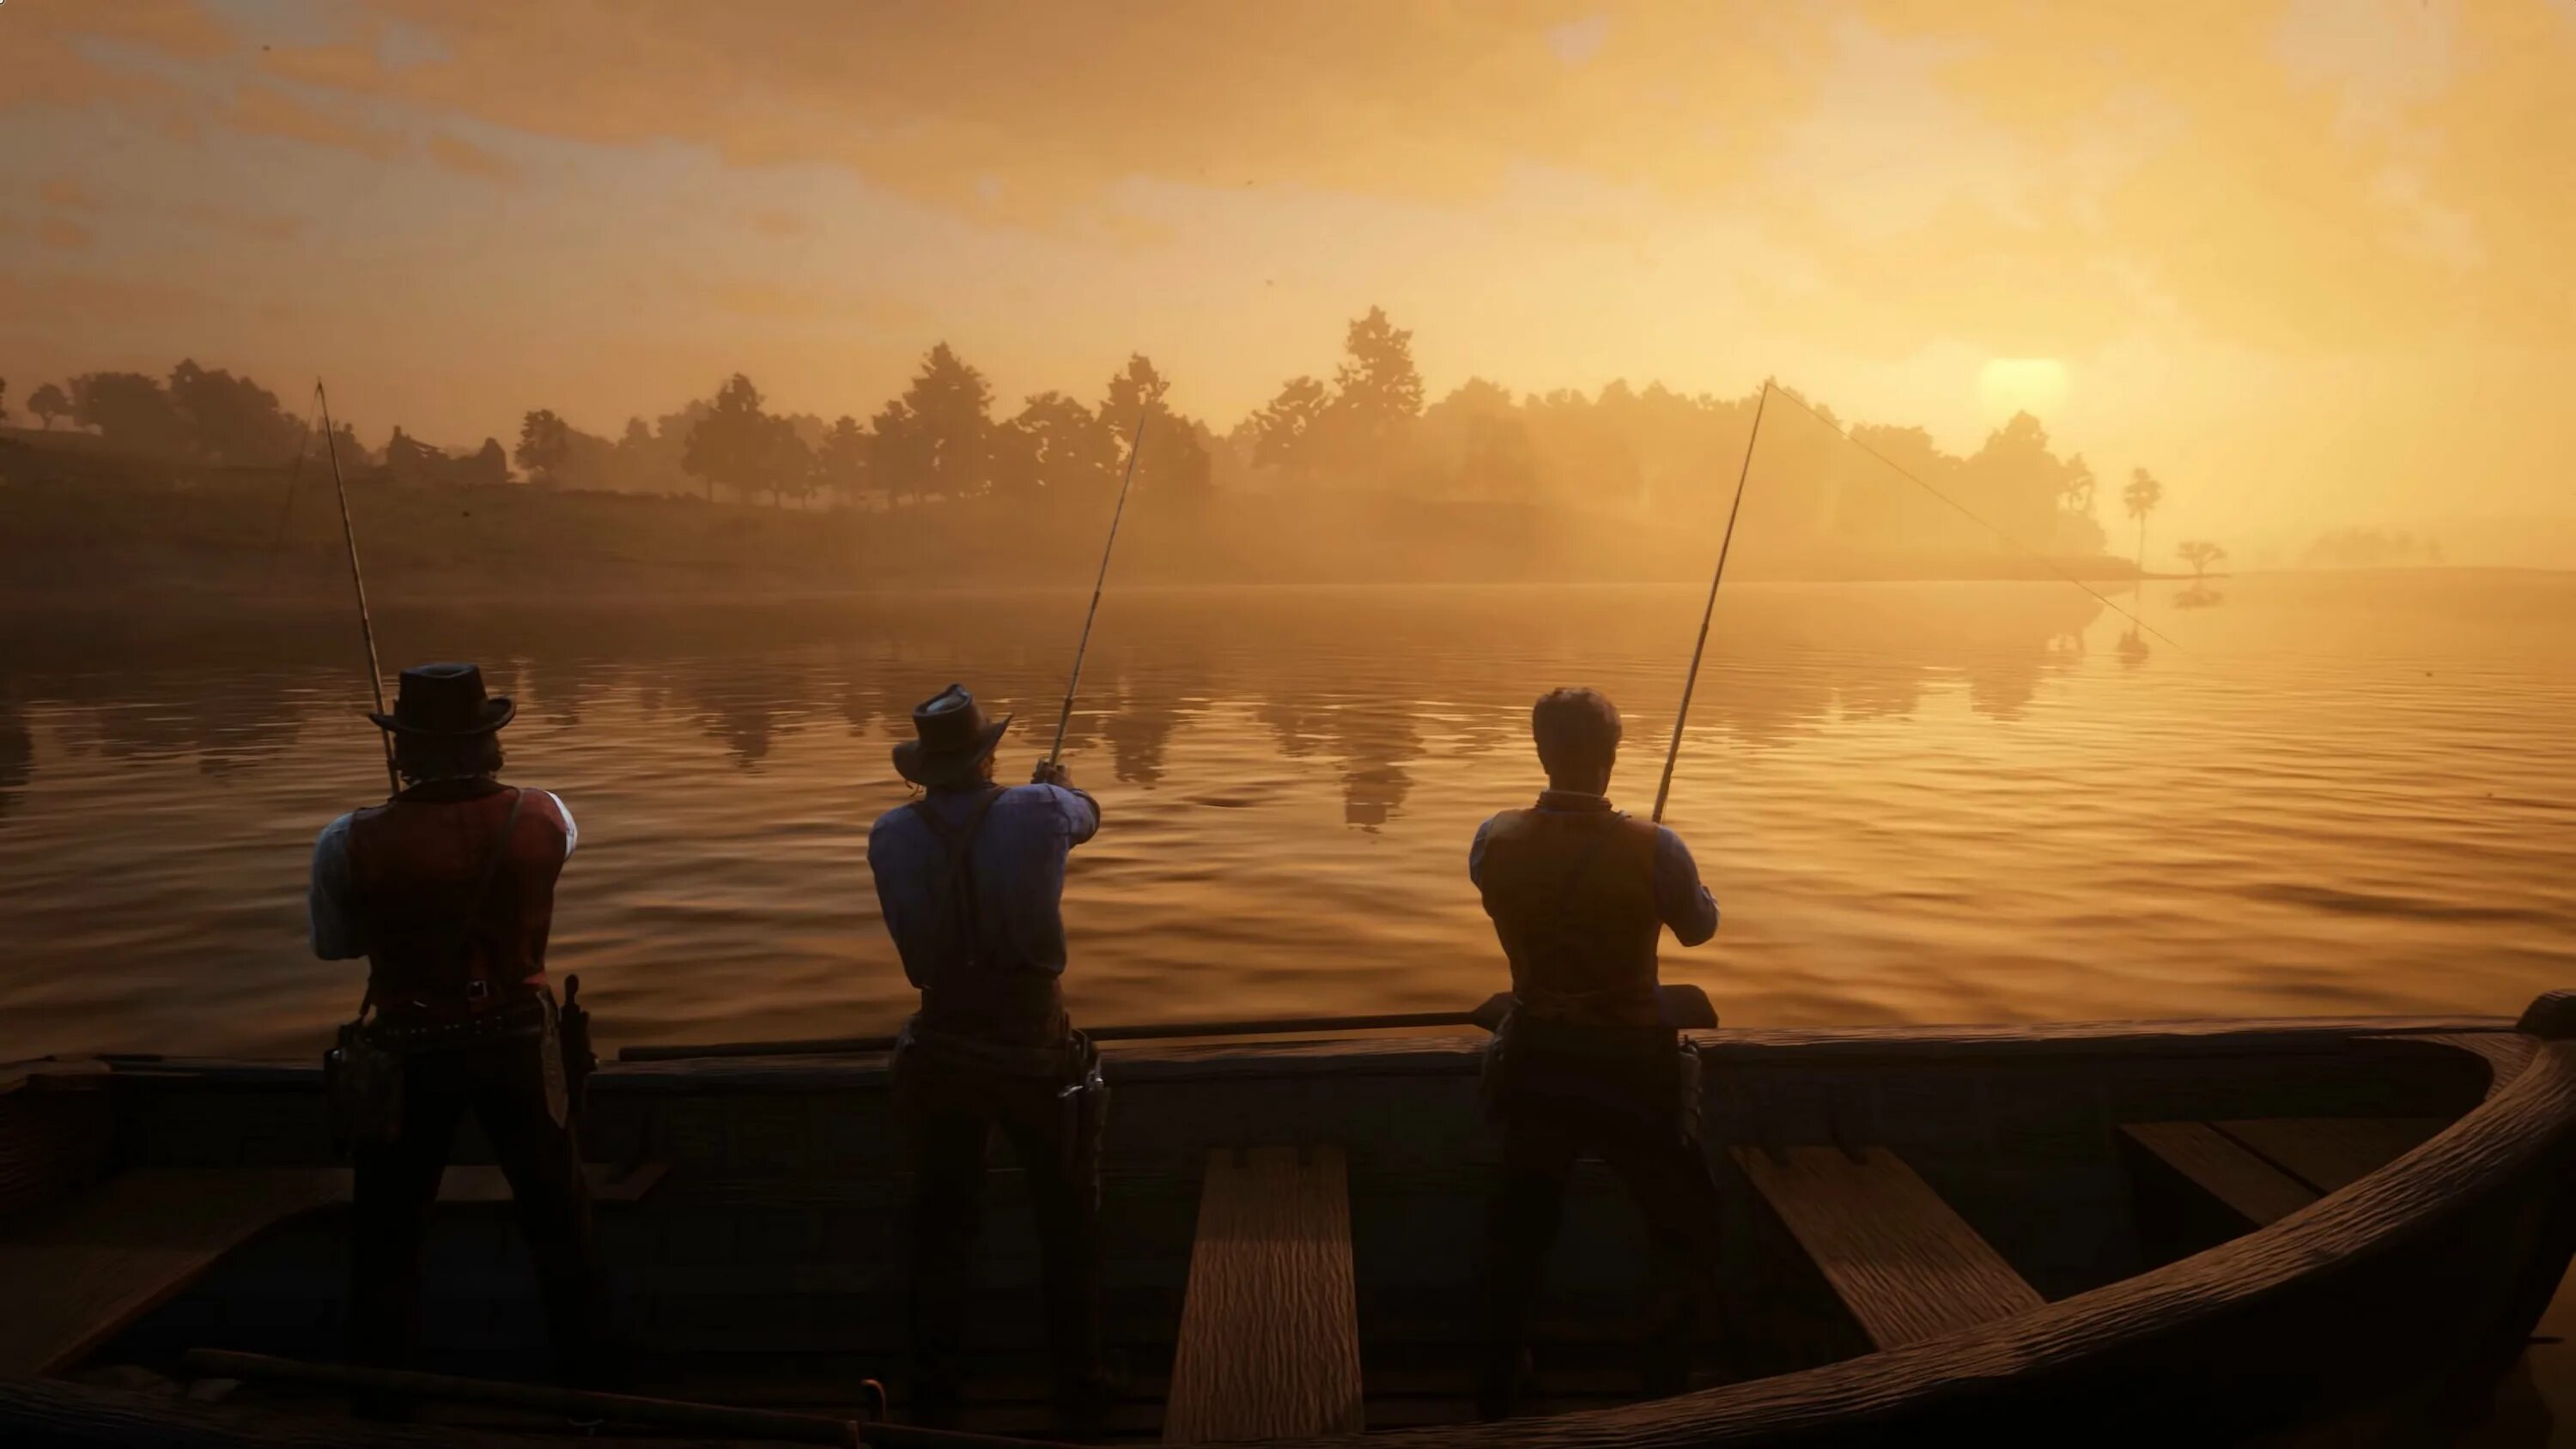 Рдр рыбалка. Red Dead Redemption 2 рыбалка. Red Dead Redemption рыбалка. Red Dead Redemption 2 рыба. Red Dead Redemption 2 озера для рыбалки.